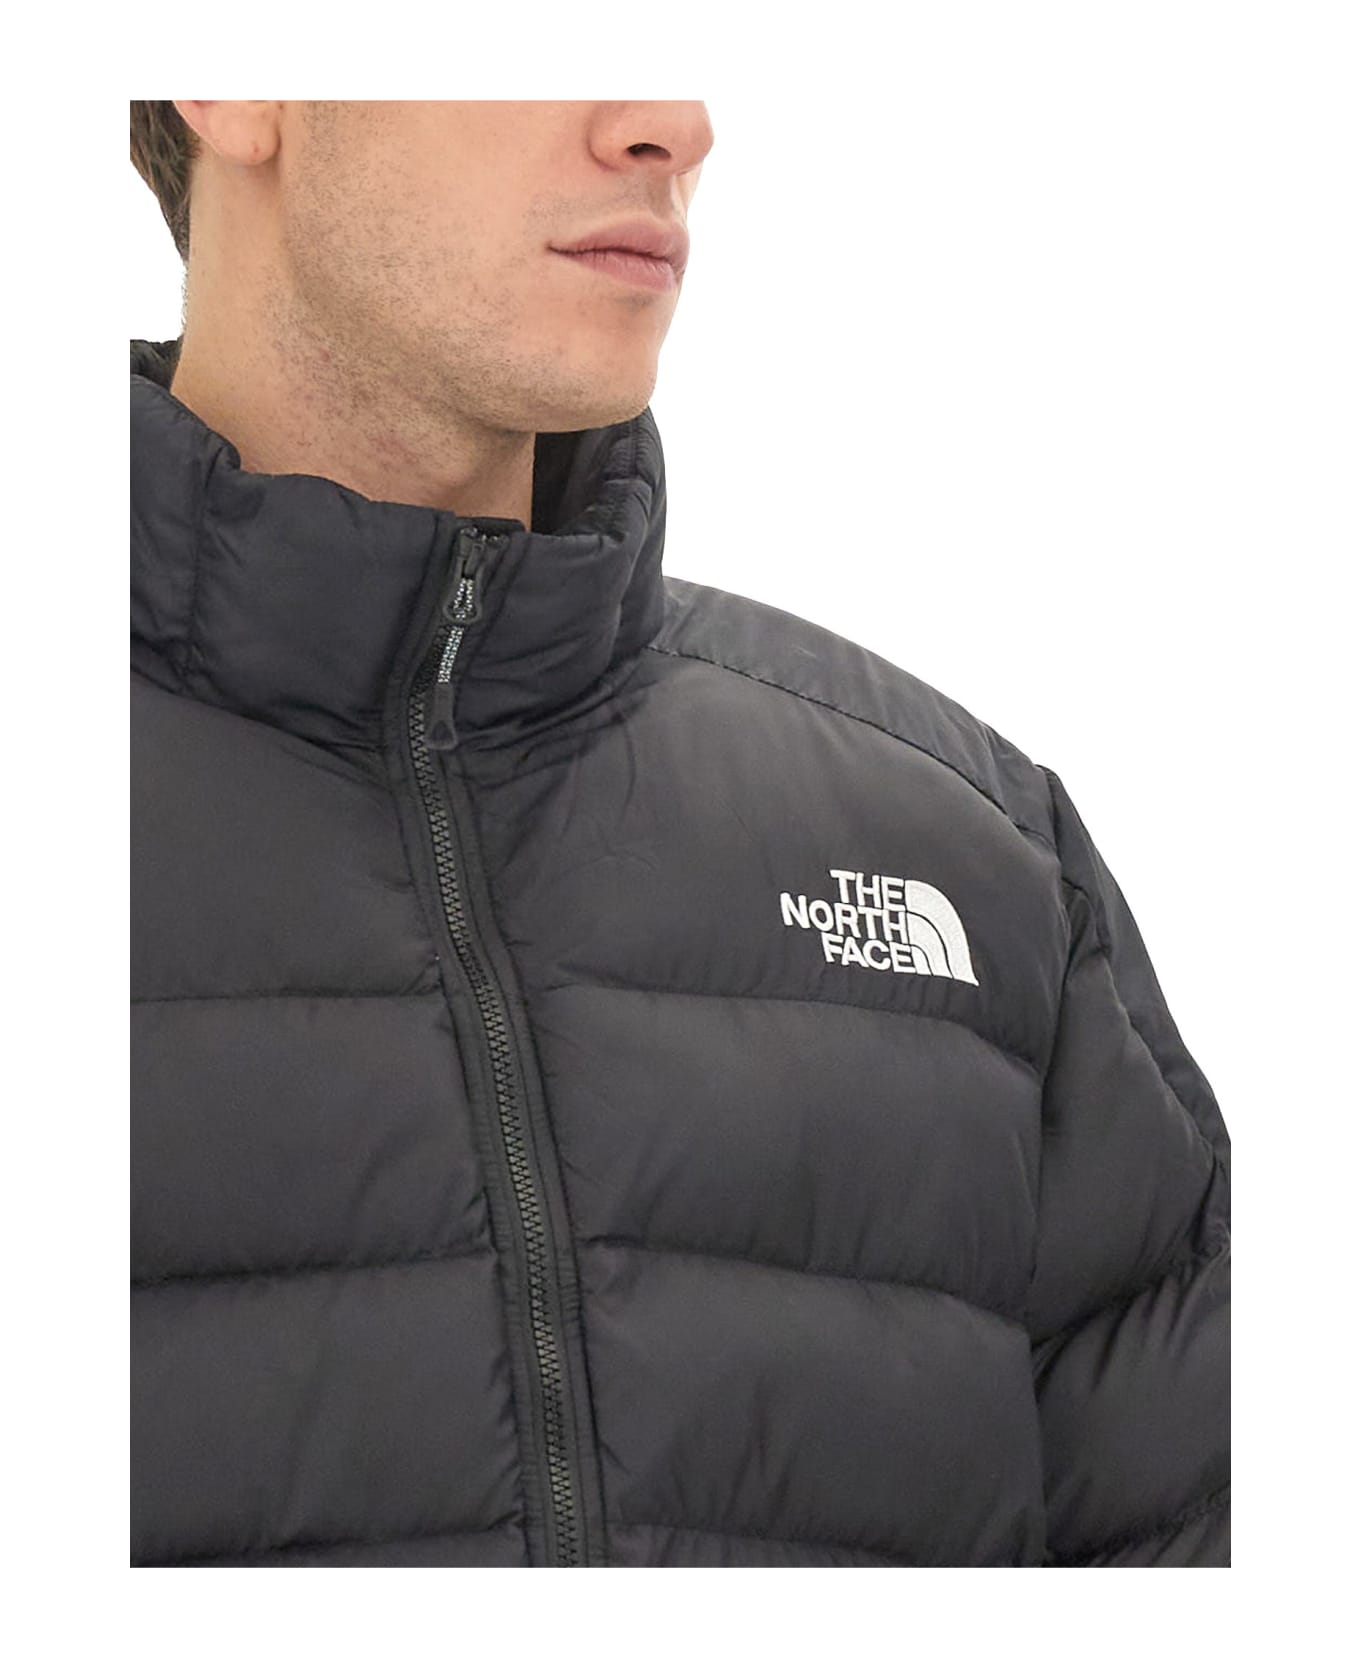 The North Face Jacket With Logo Print - Black ダウンジャケット